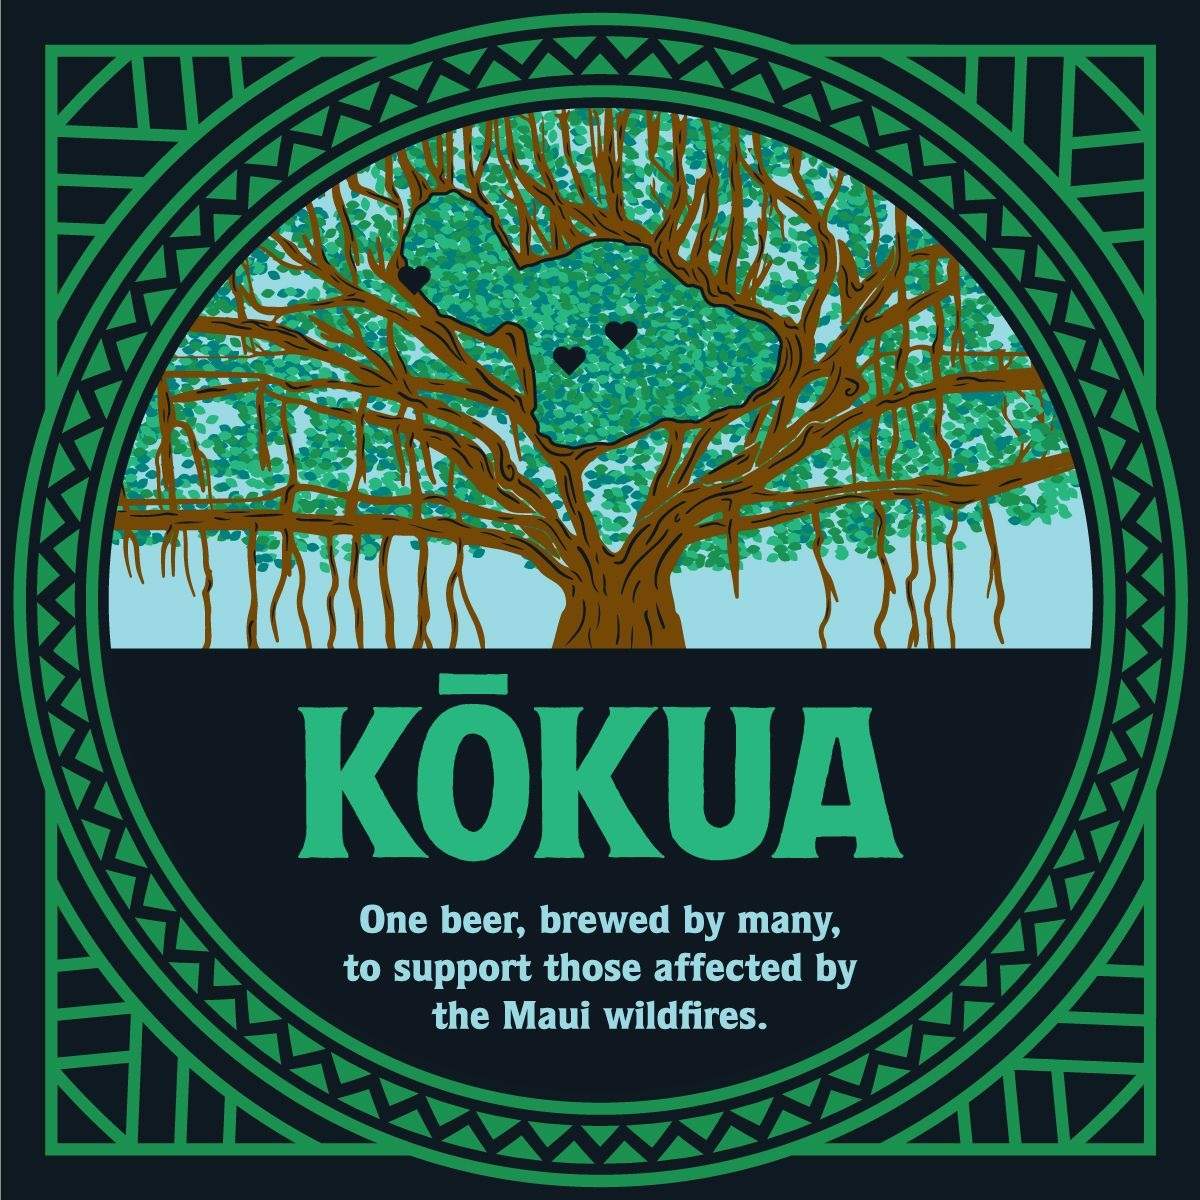 Kokua beer logo